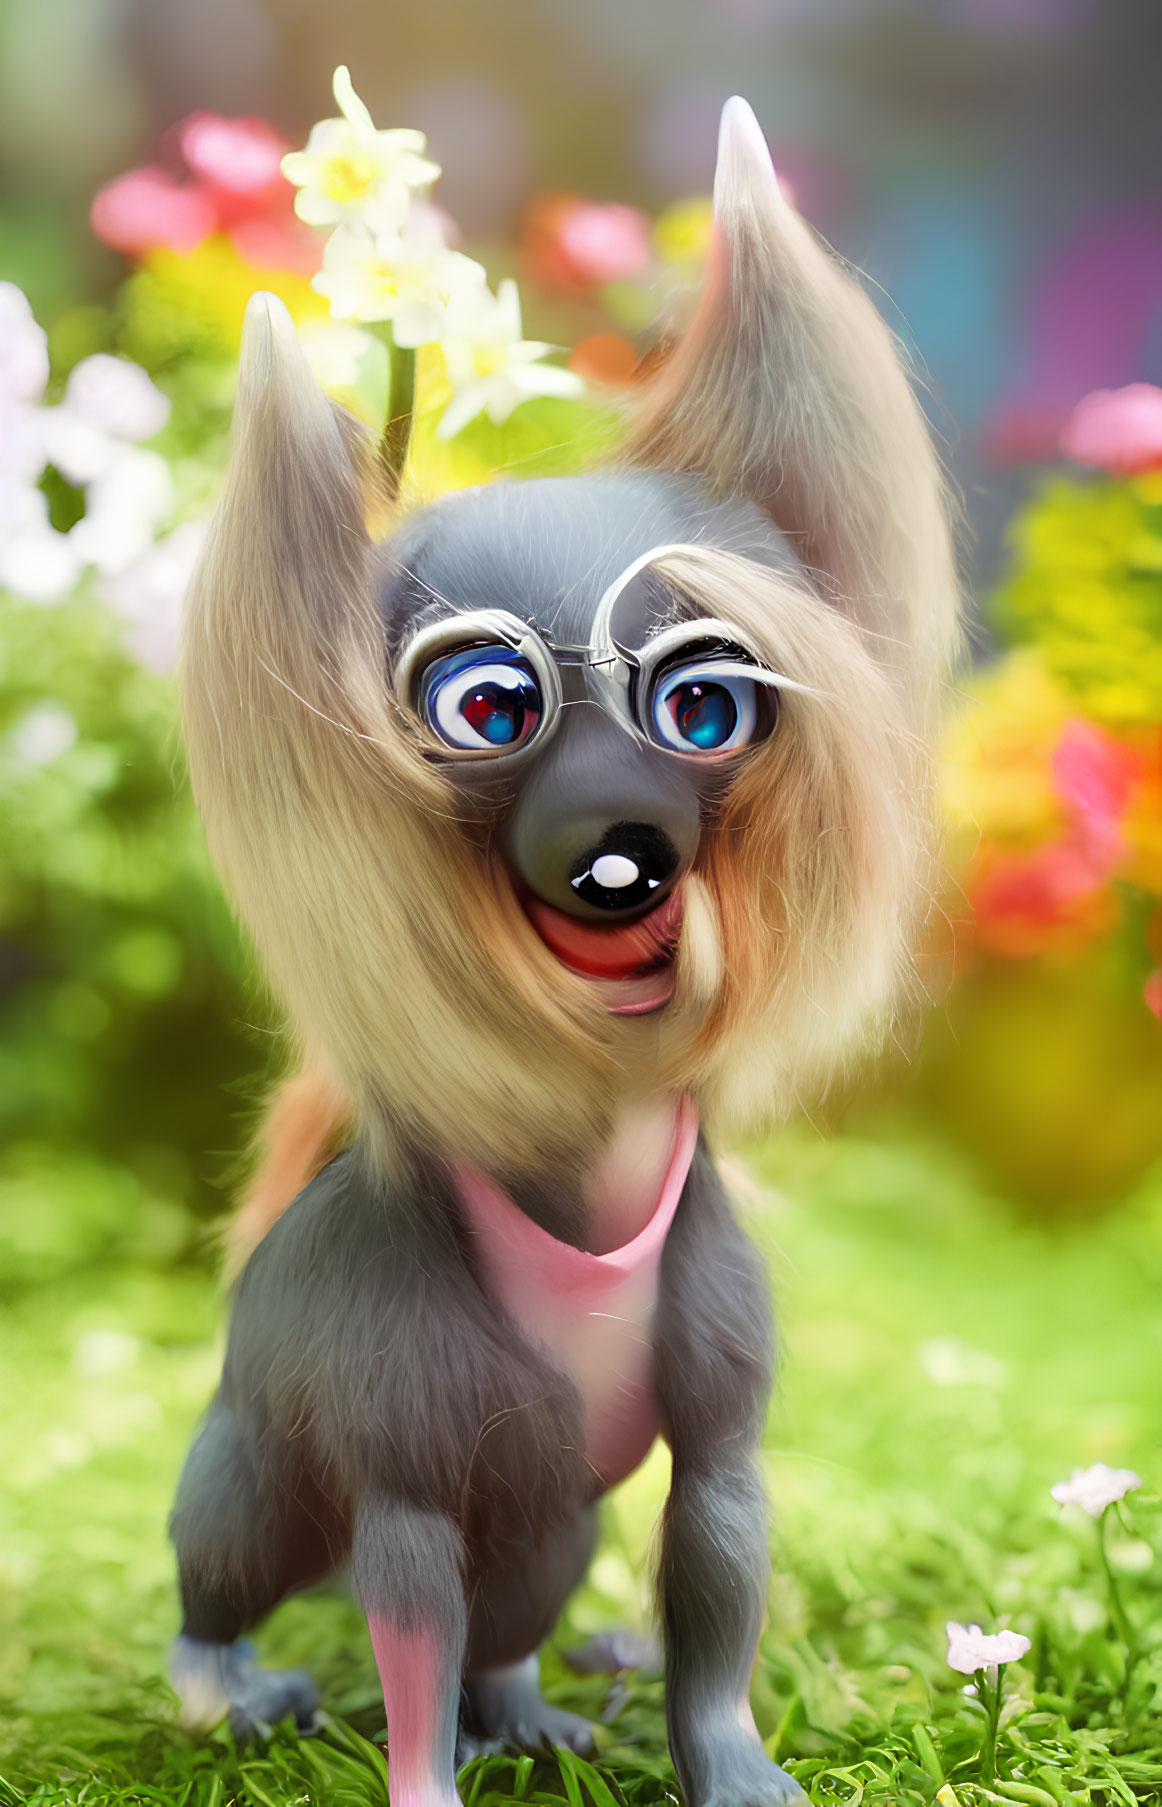 Cartoonish dog digital art with large ears and eyes among colorful flowers